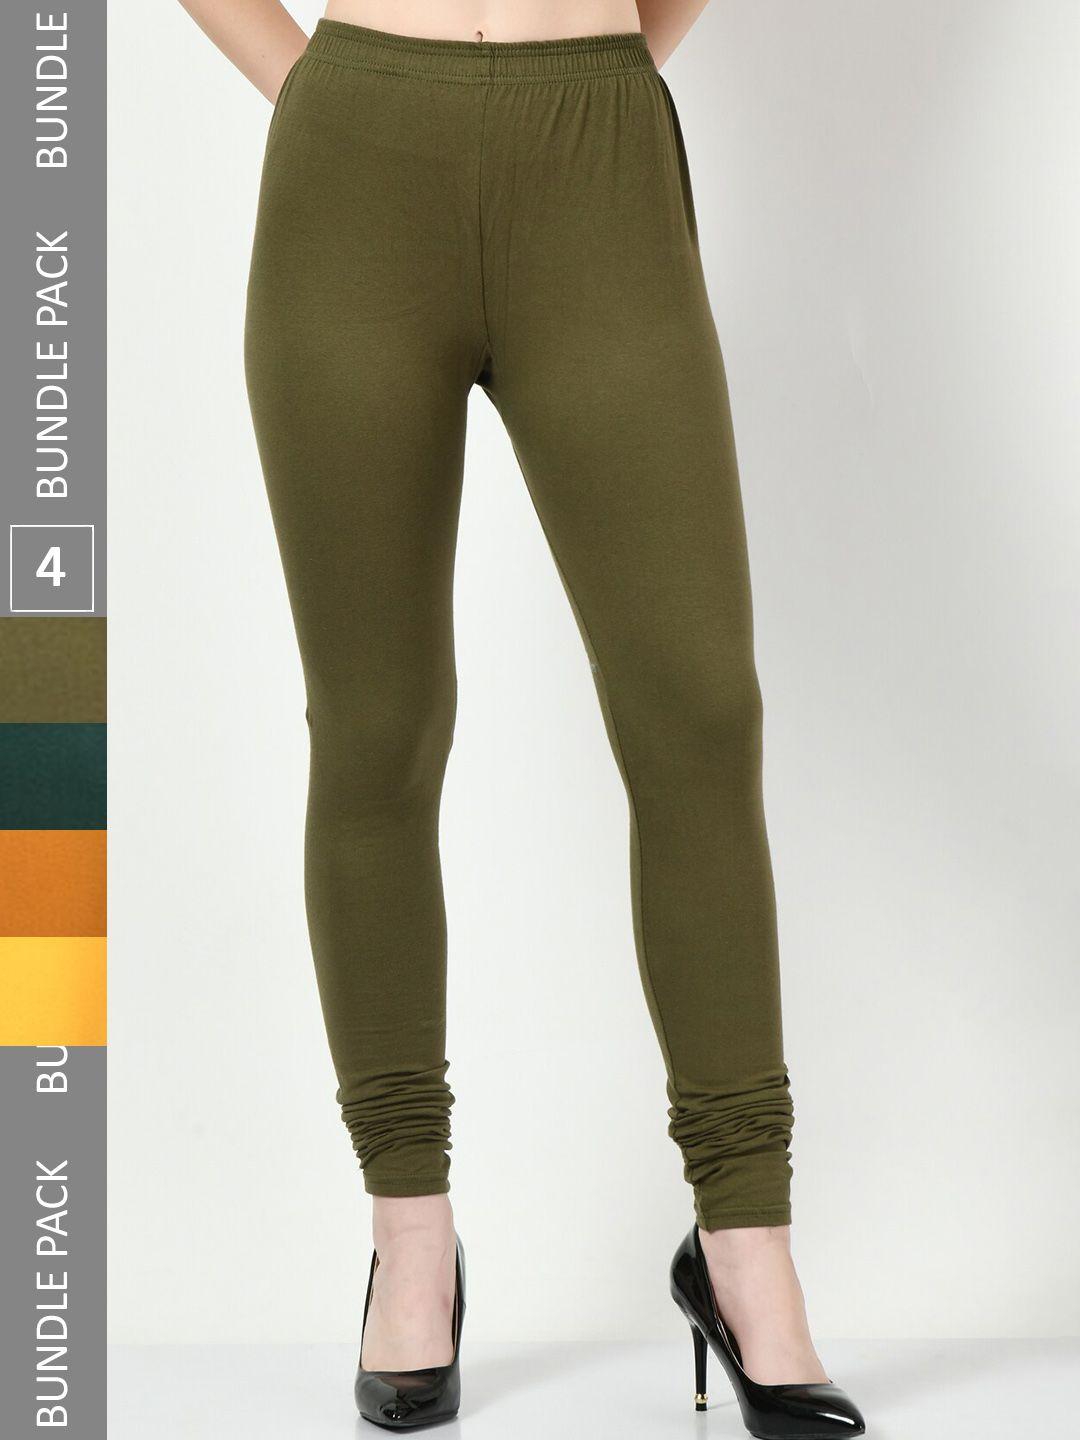 baesd pack of 4 churidar-length slim-fit soft leggings